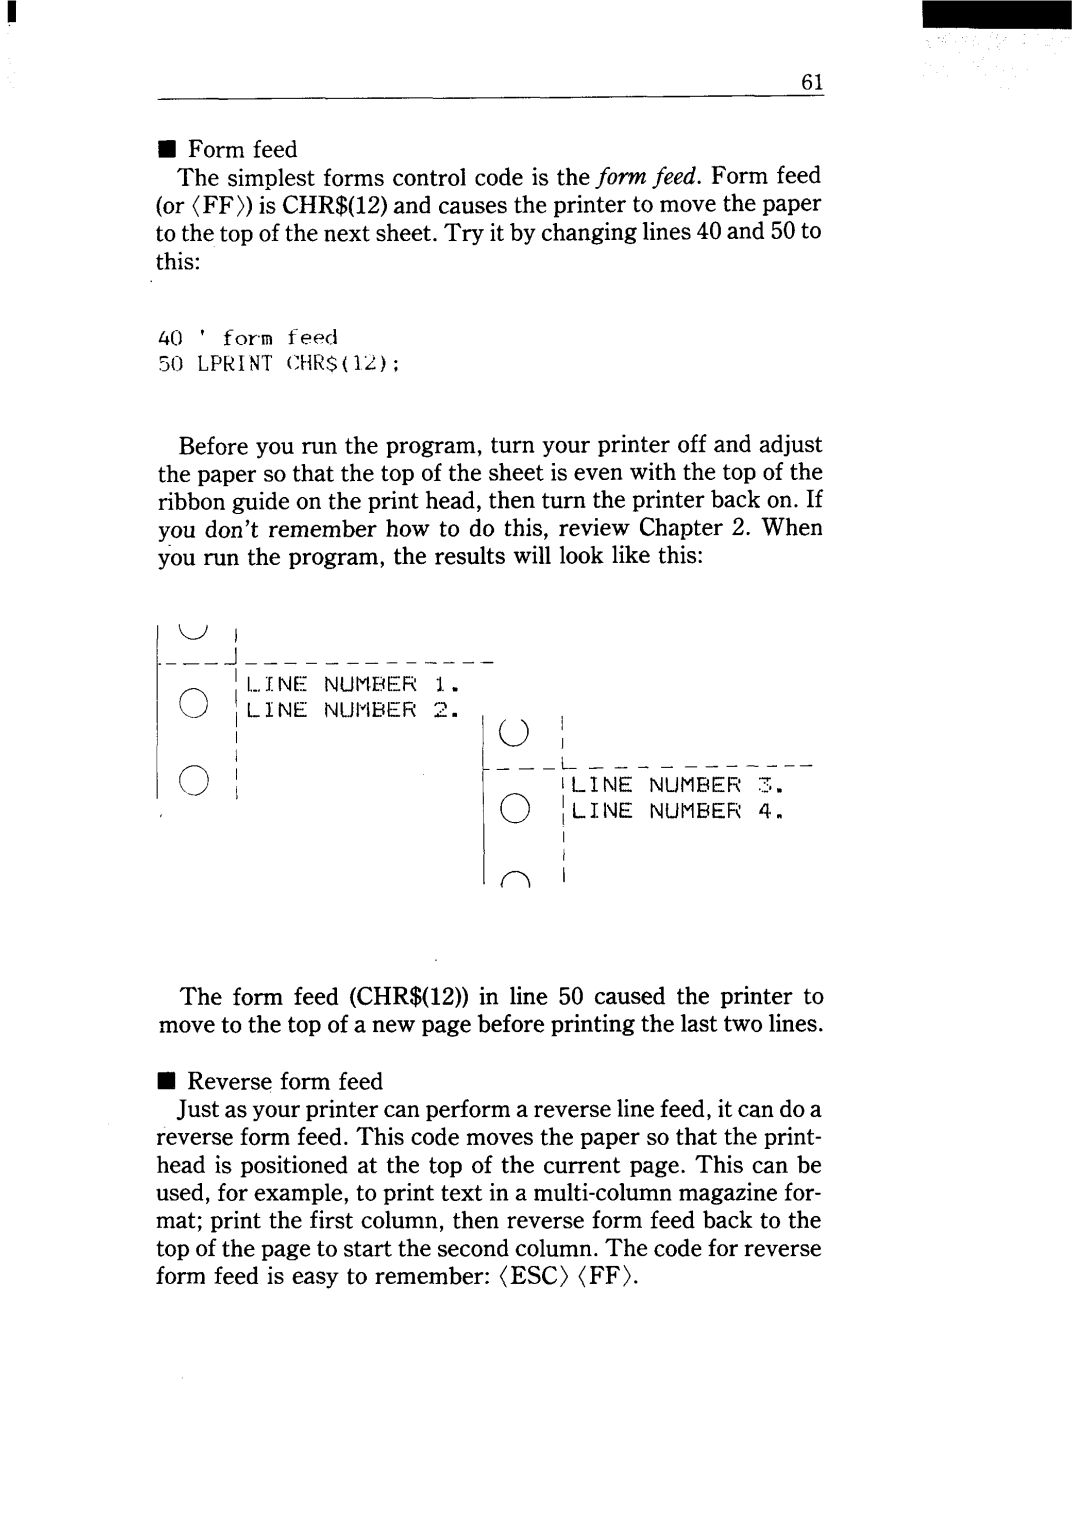 Star Micronics NX-15 user manual 